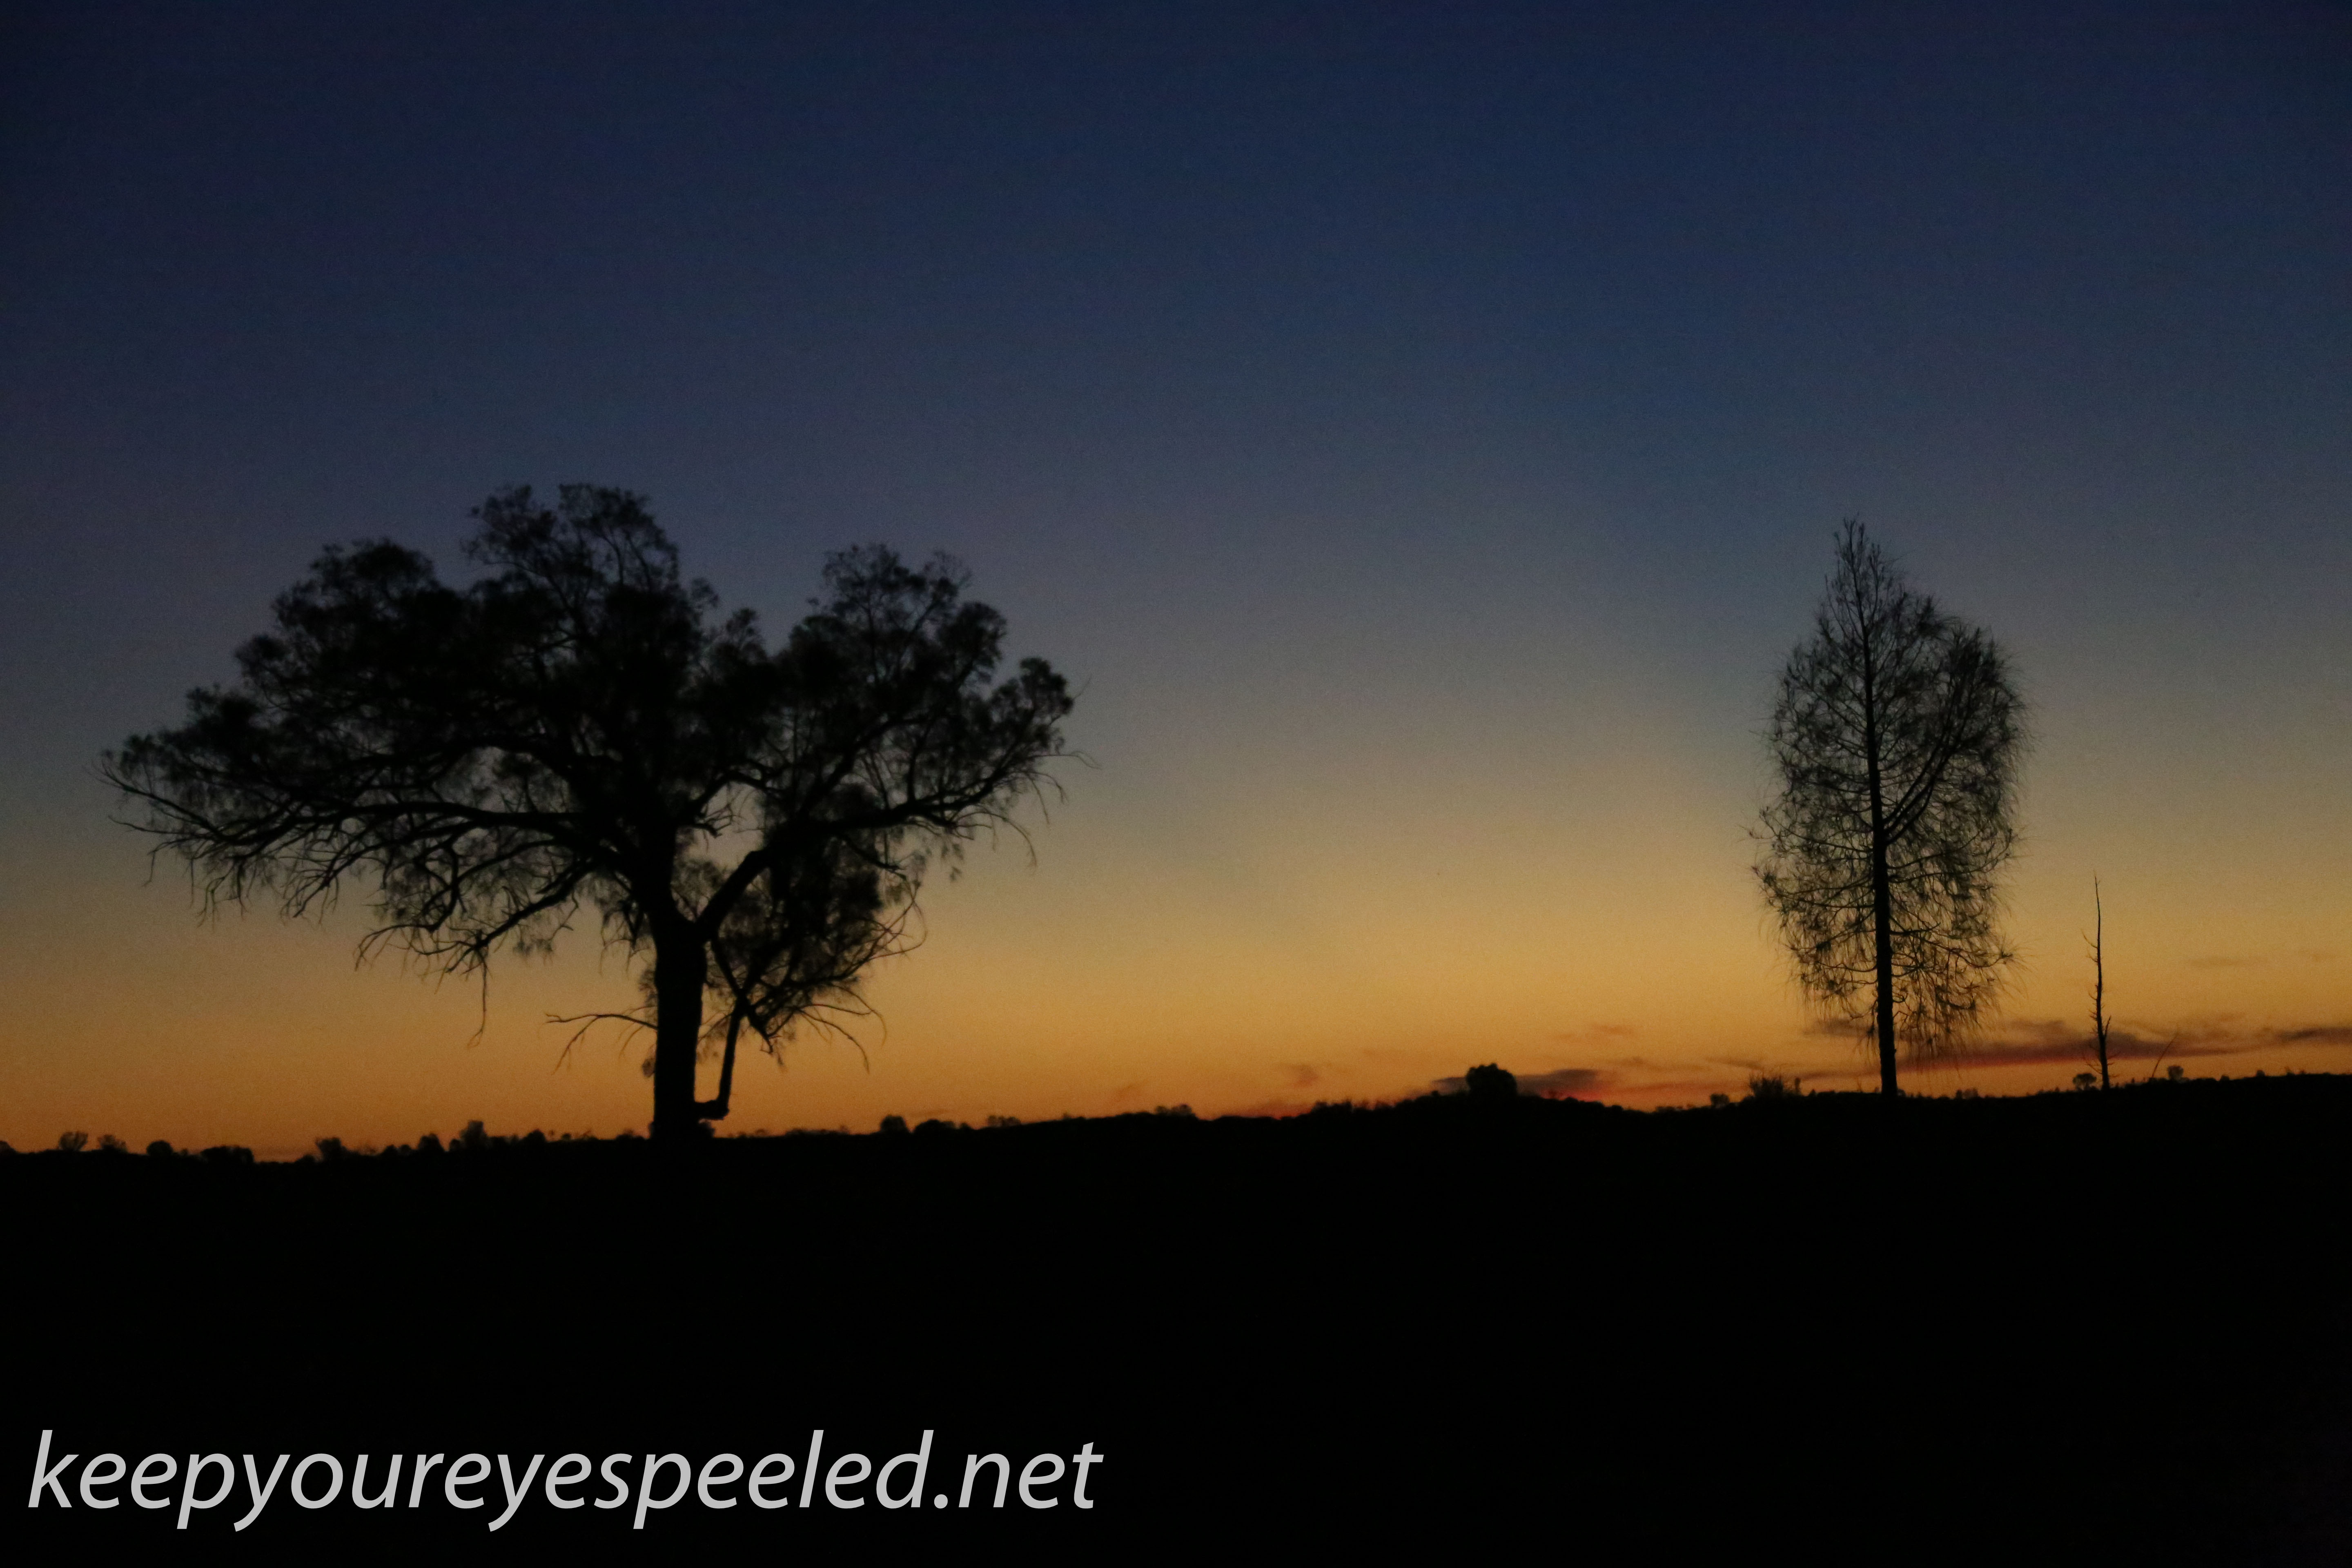 Uluru sunset-34